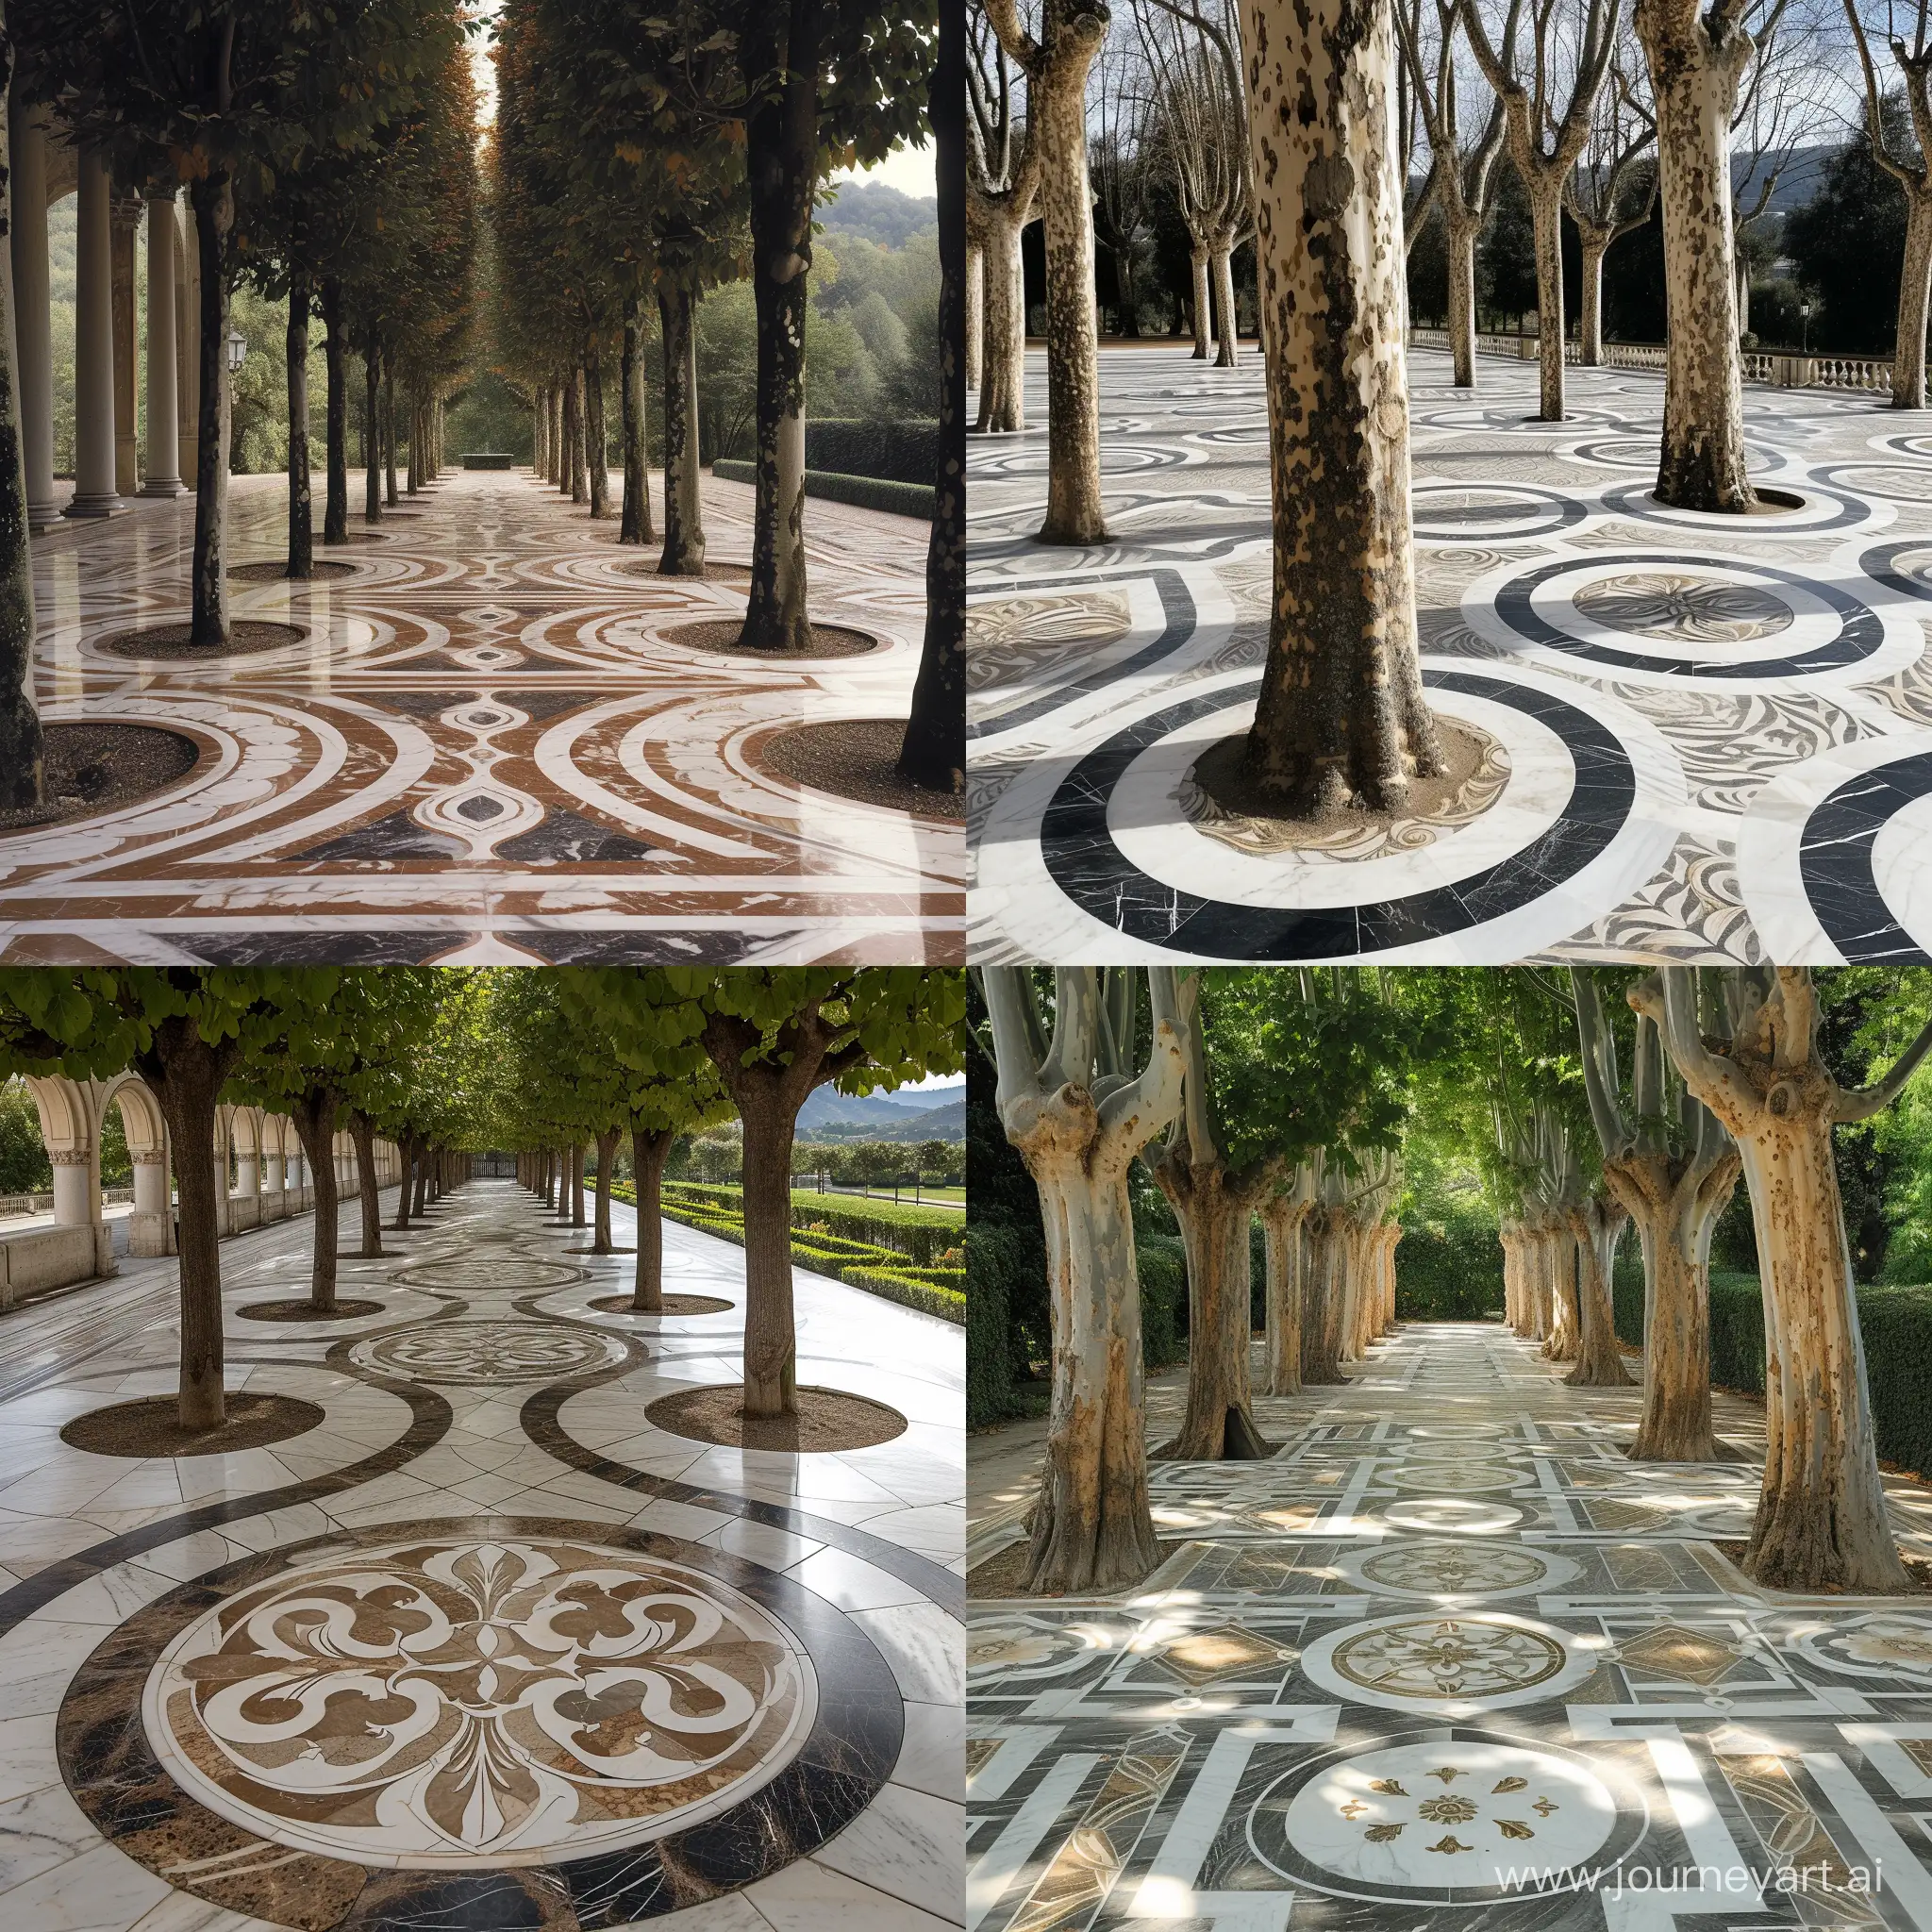 marble rokoko pavement around trees
